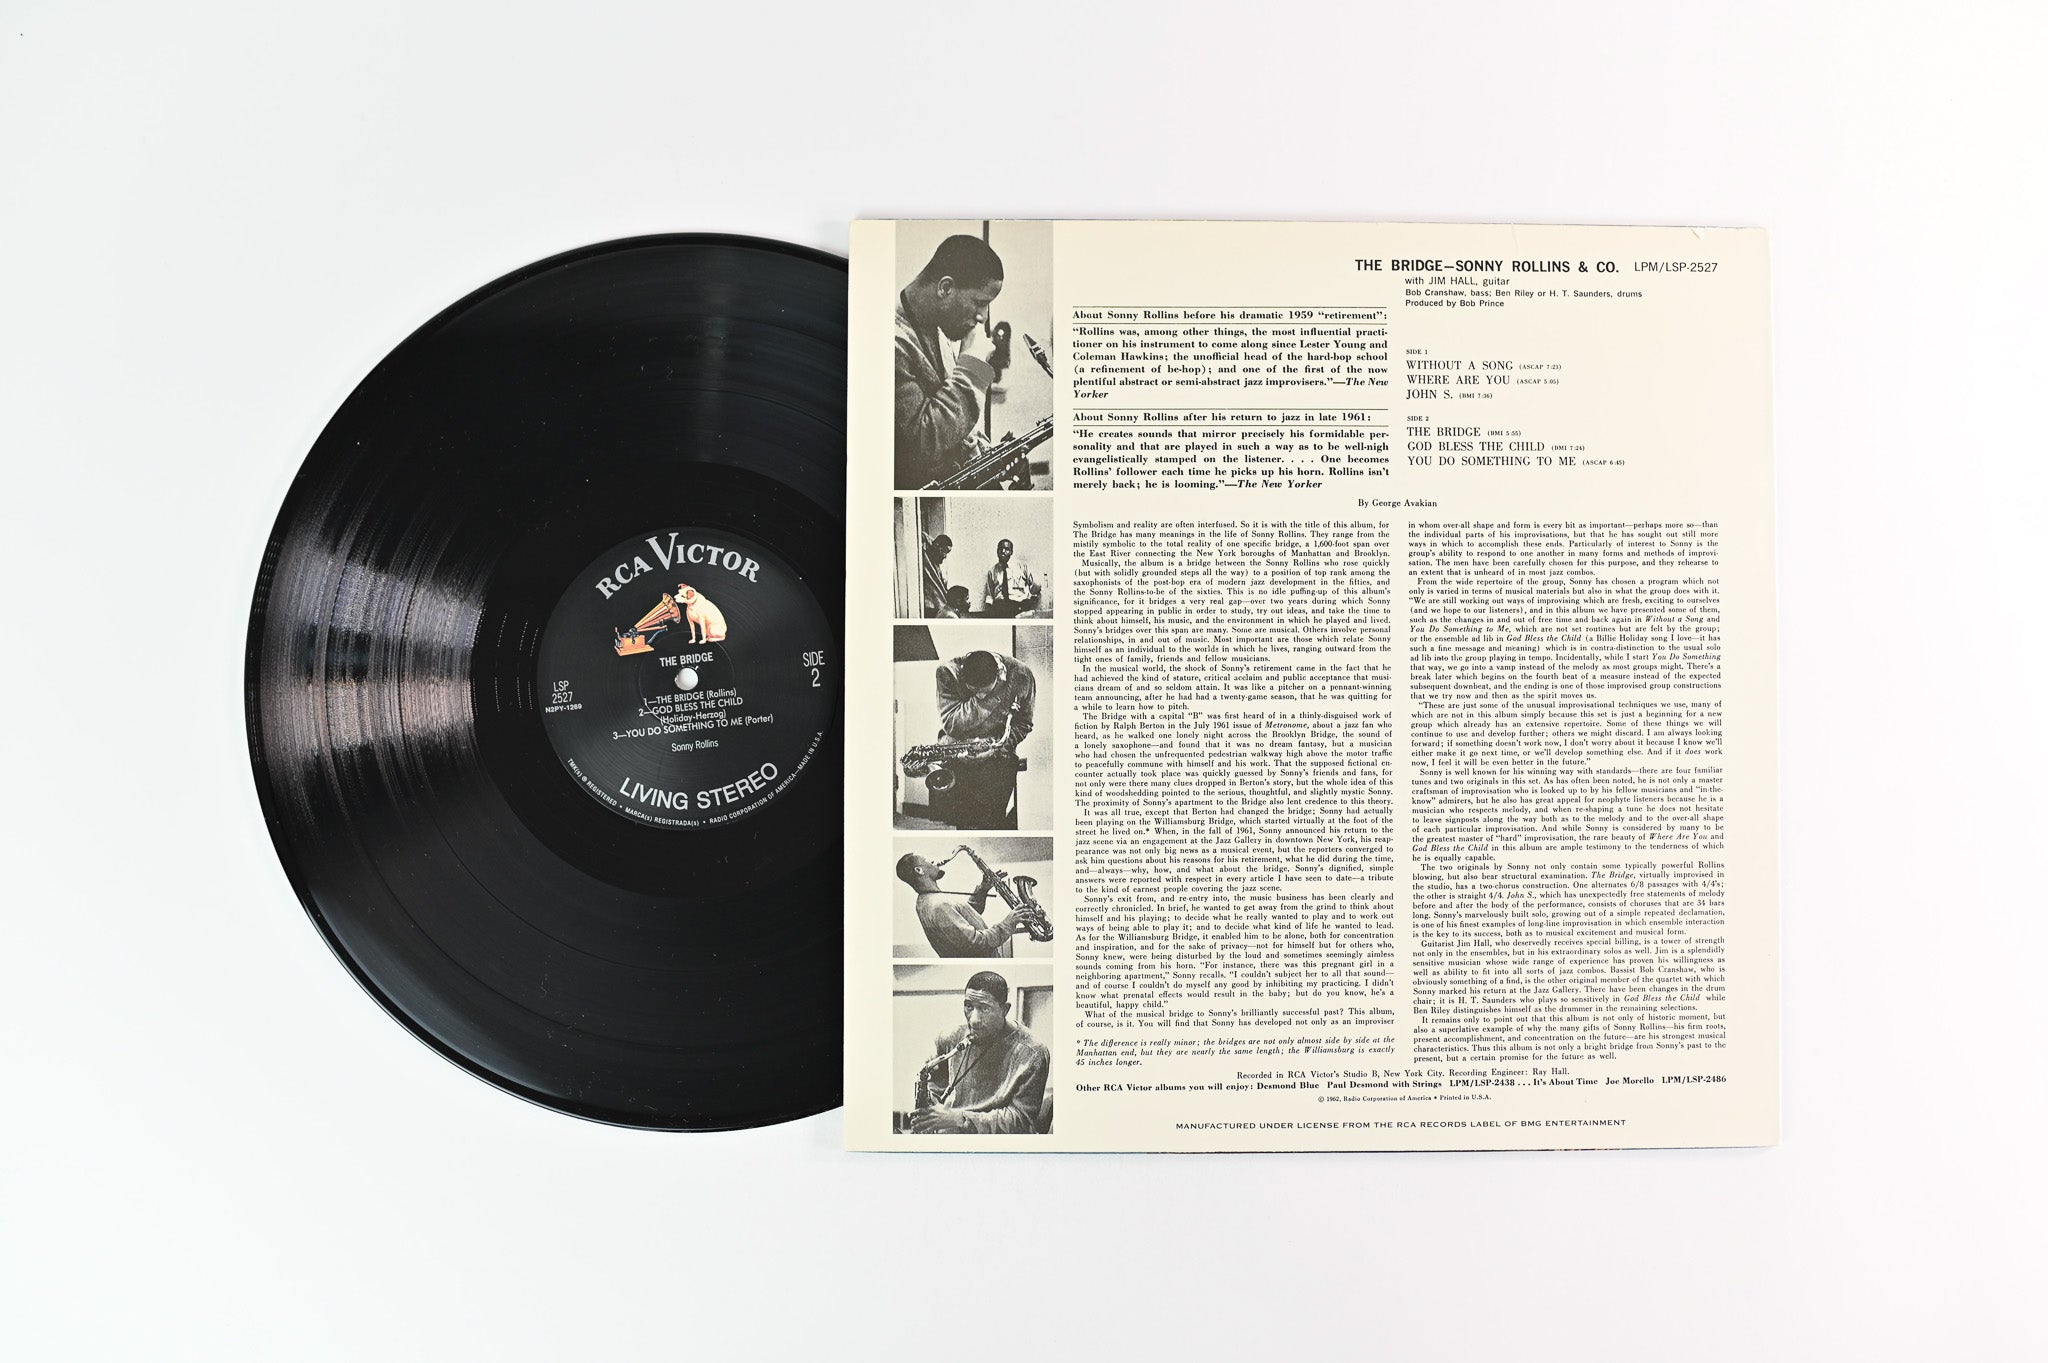 Sonny Rollins - The Bridge on RCA 180 Gram Classic Records Reissue